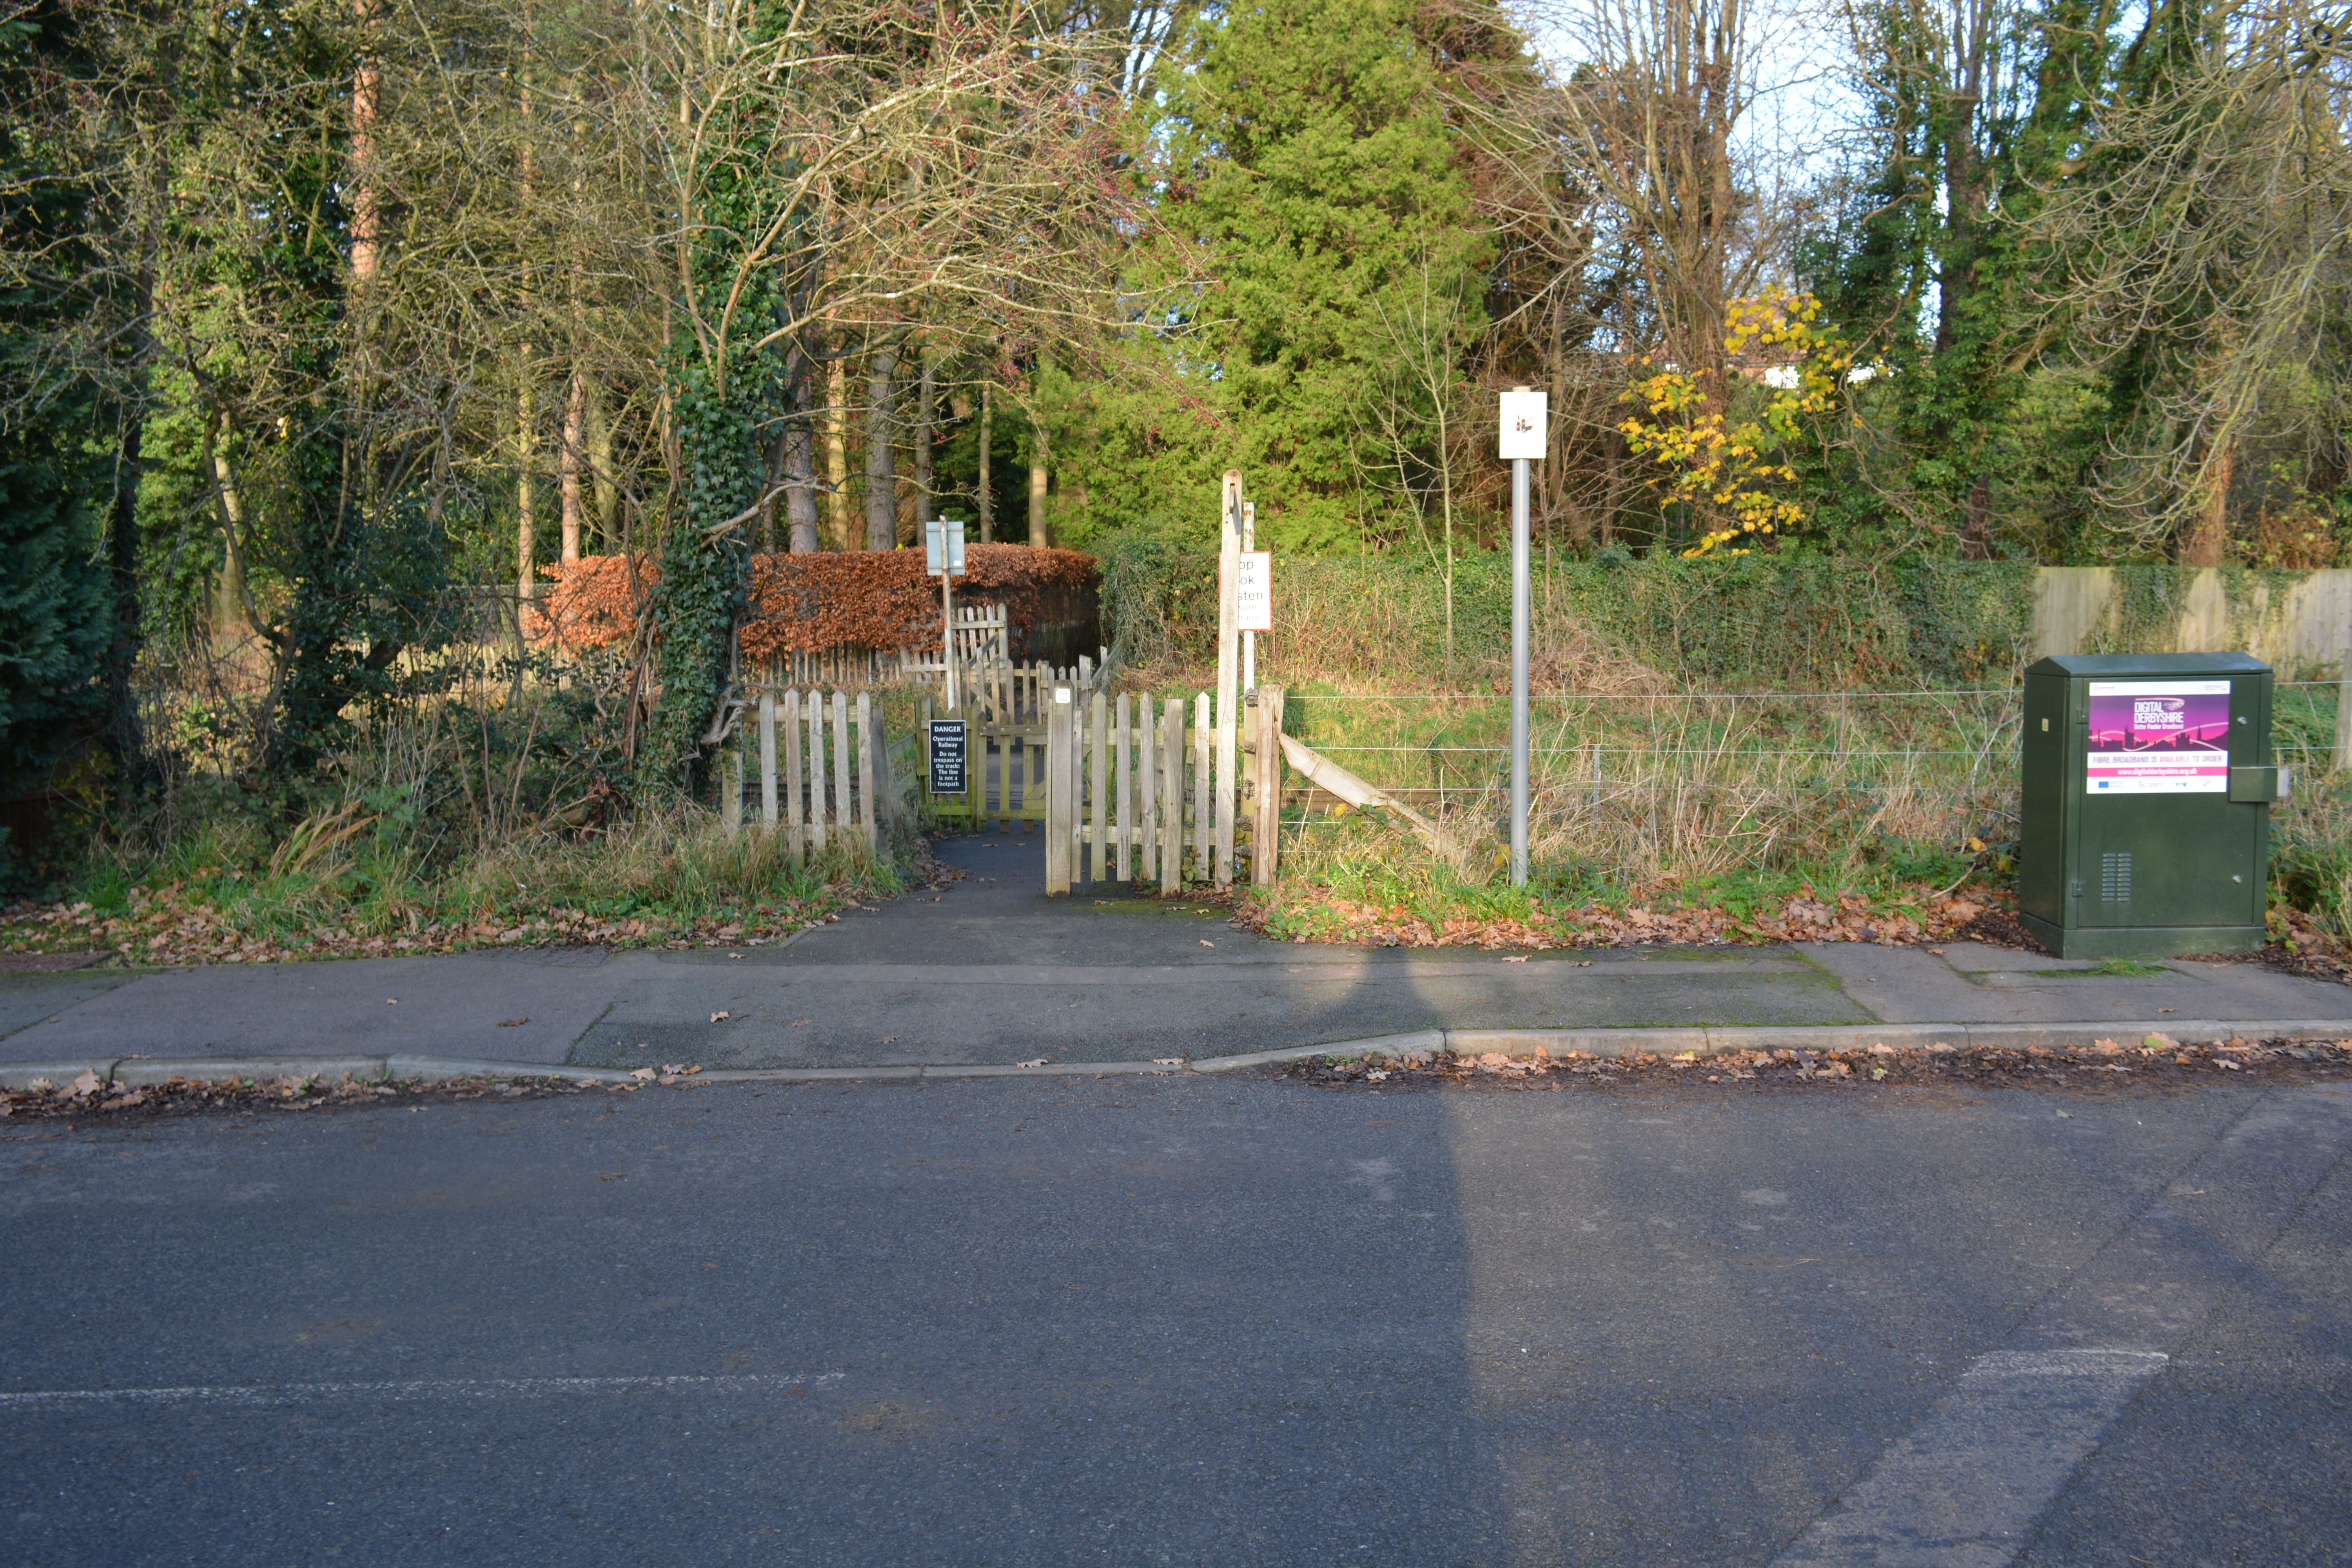 Gated crossing of Ecclesbourne Valley Railway tracks